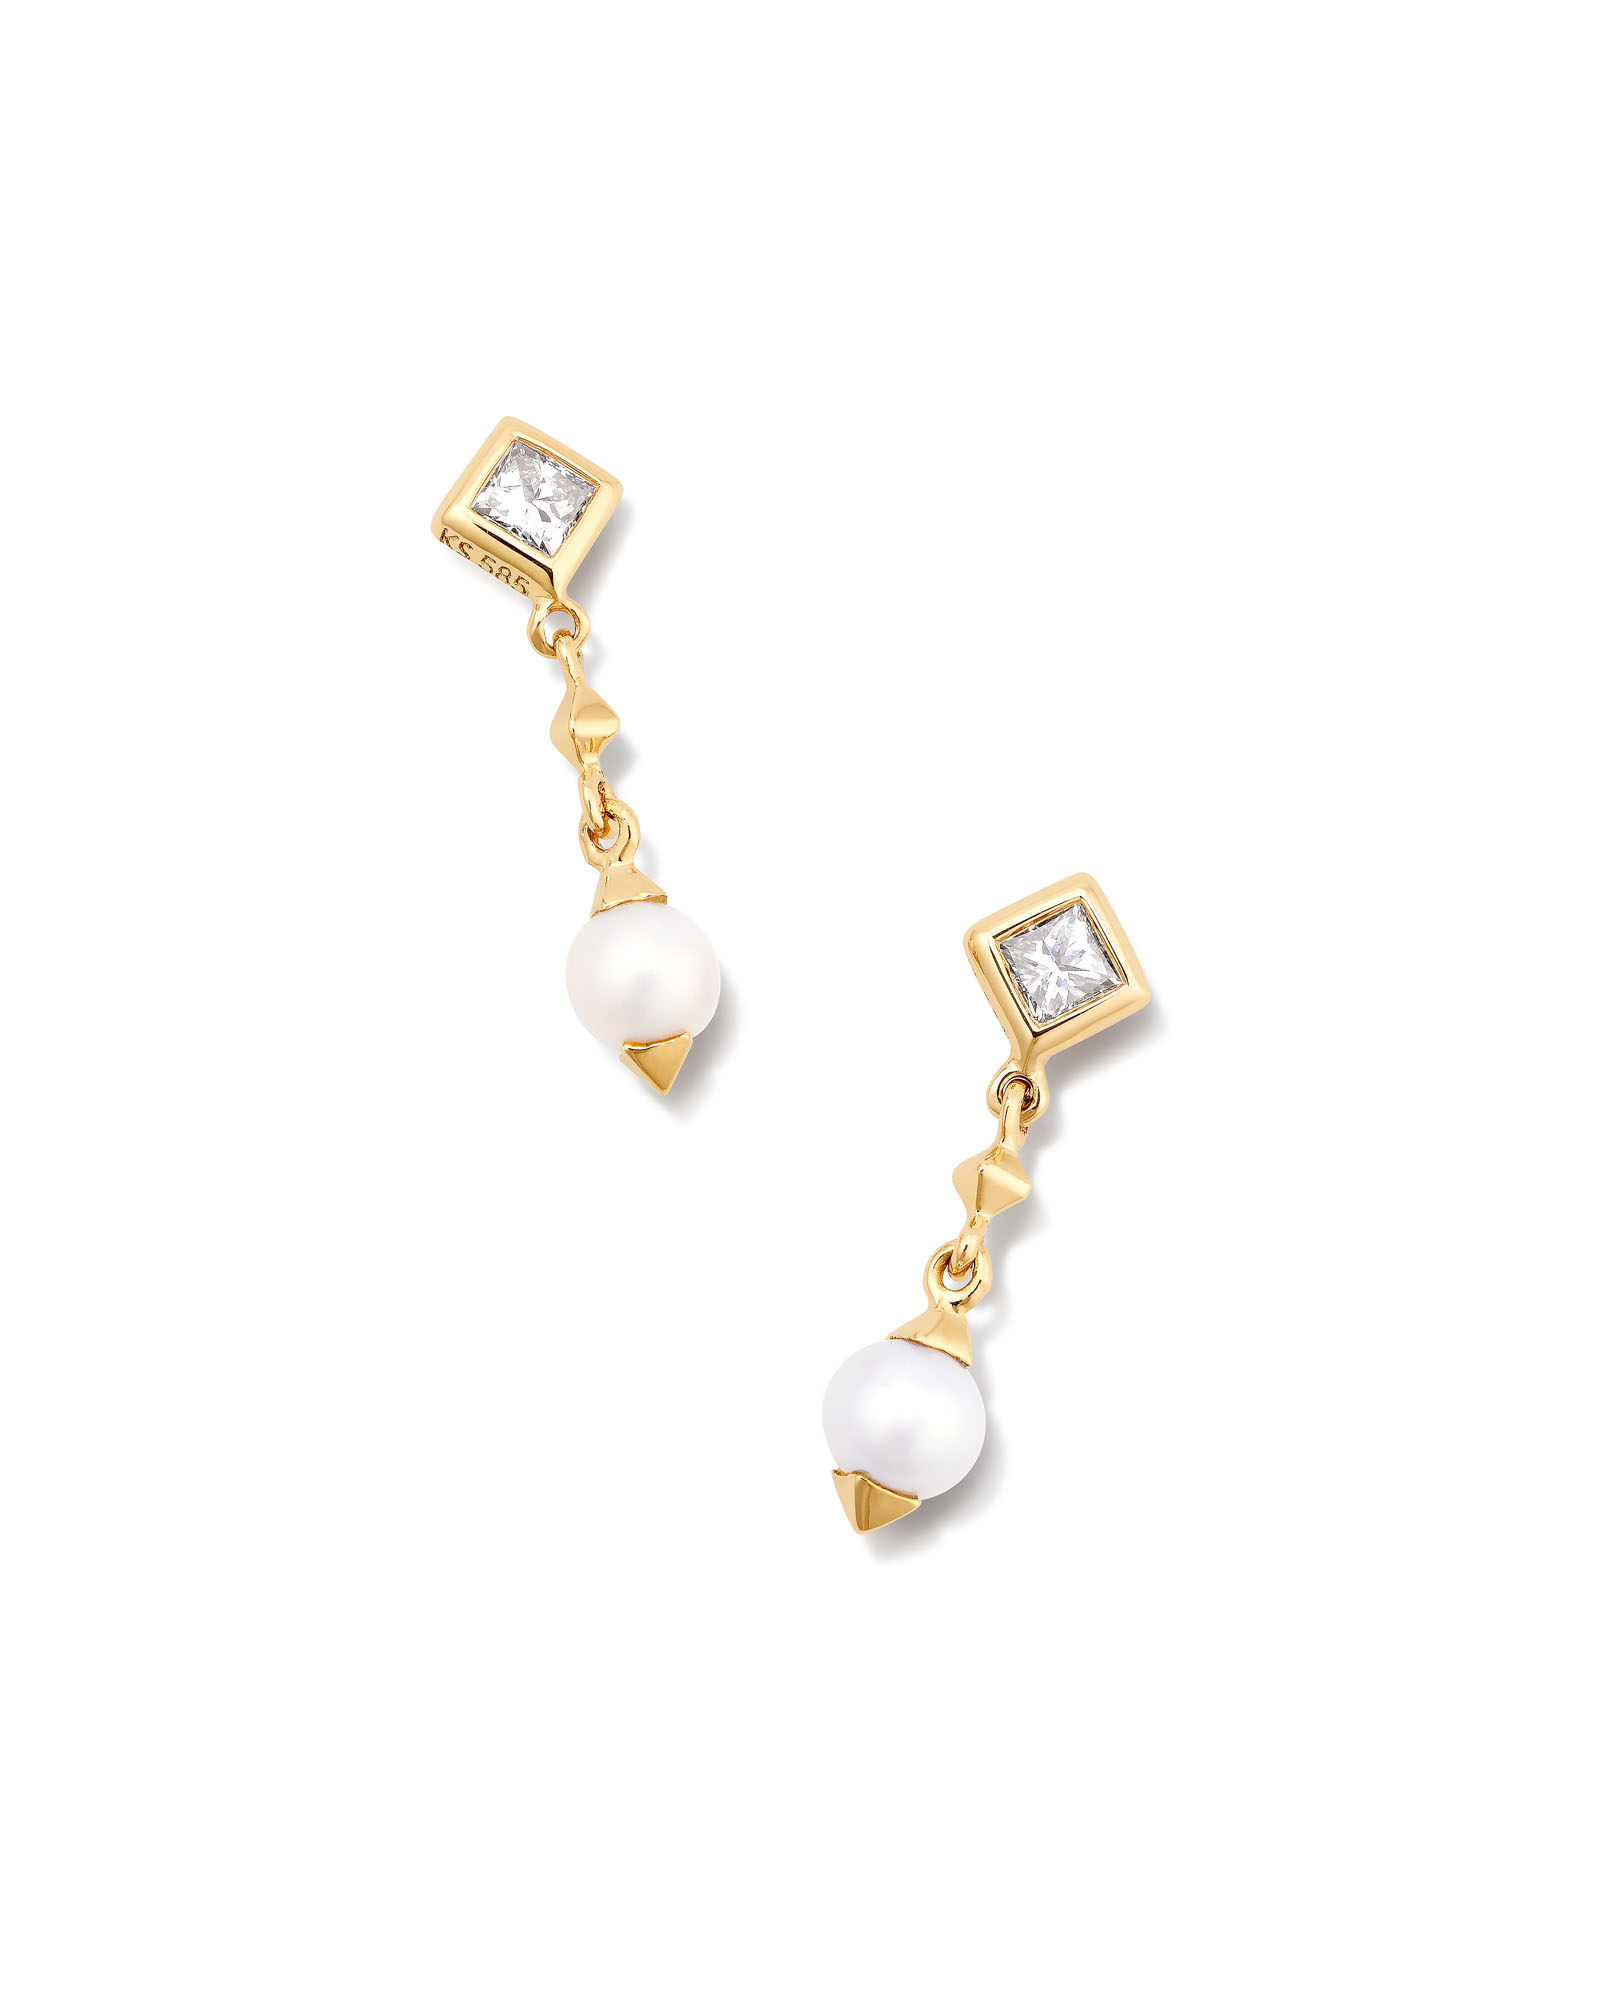 Top more than 186 14k gold pearl dangle earrings super hot